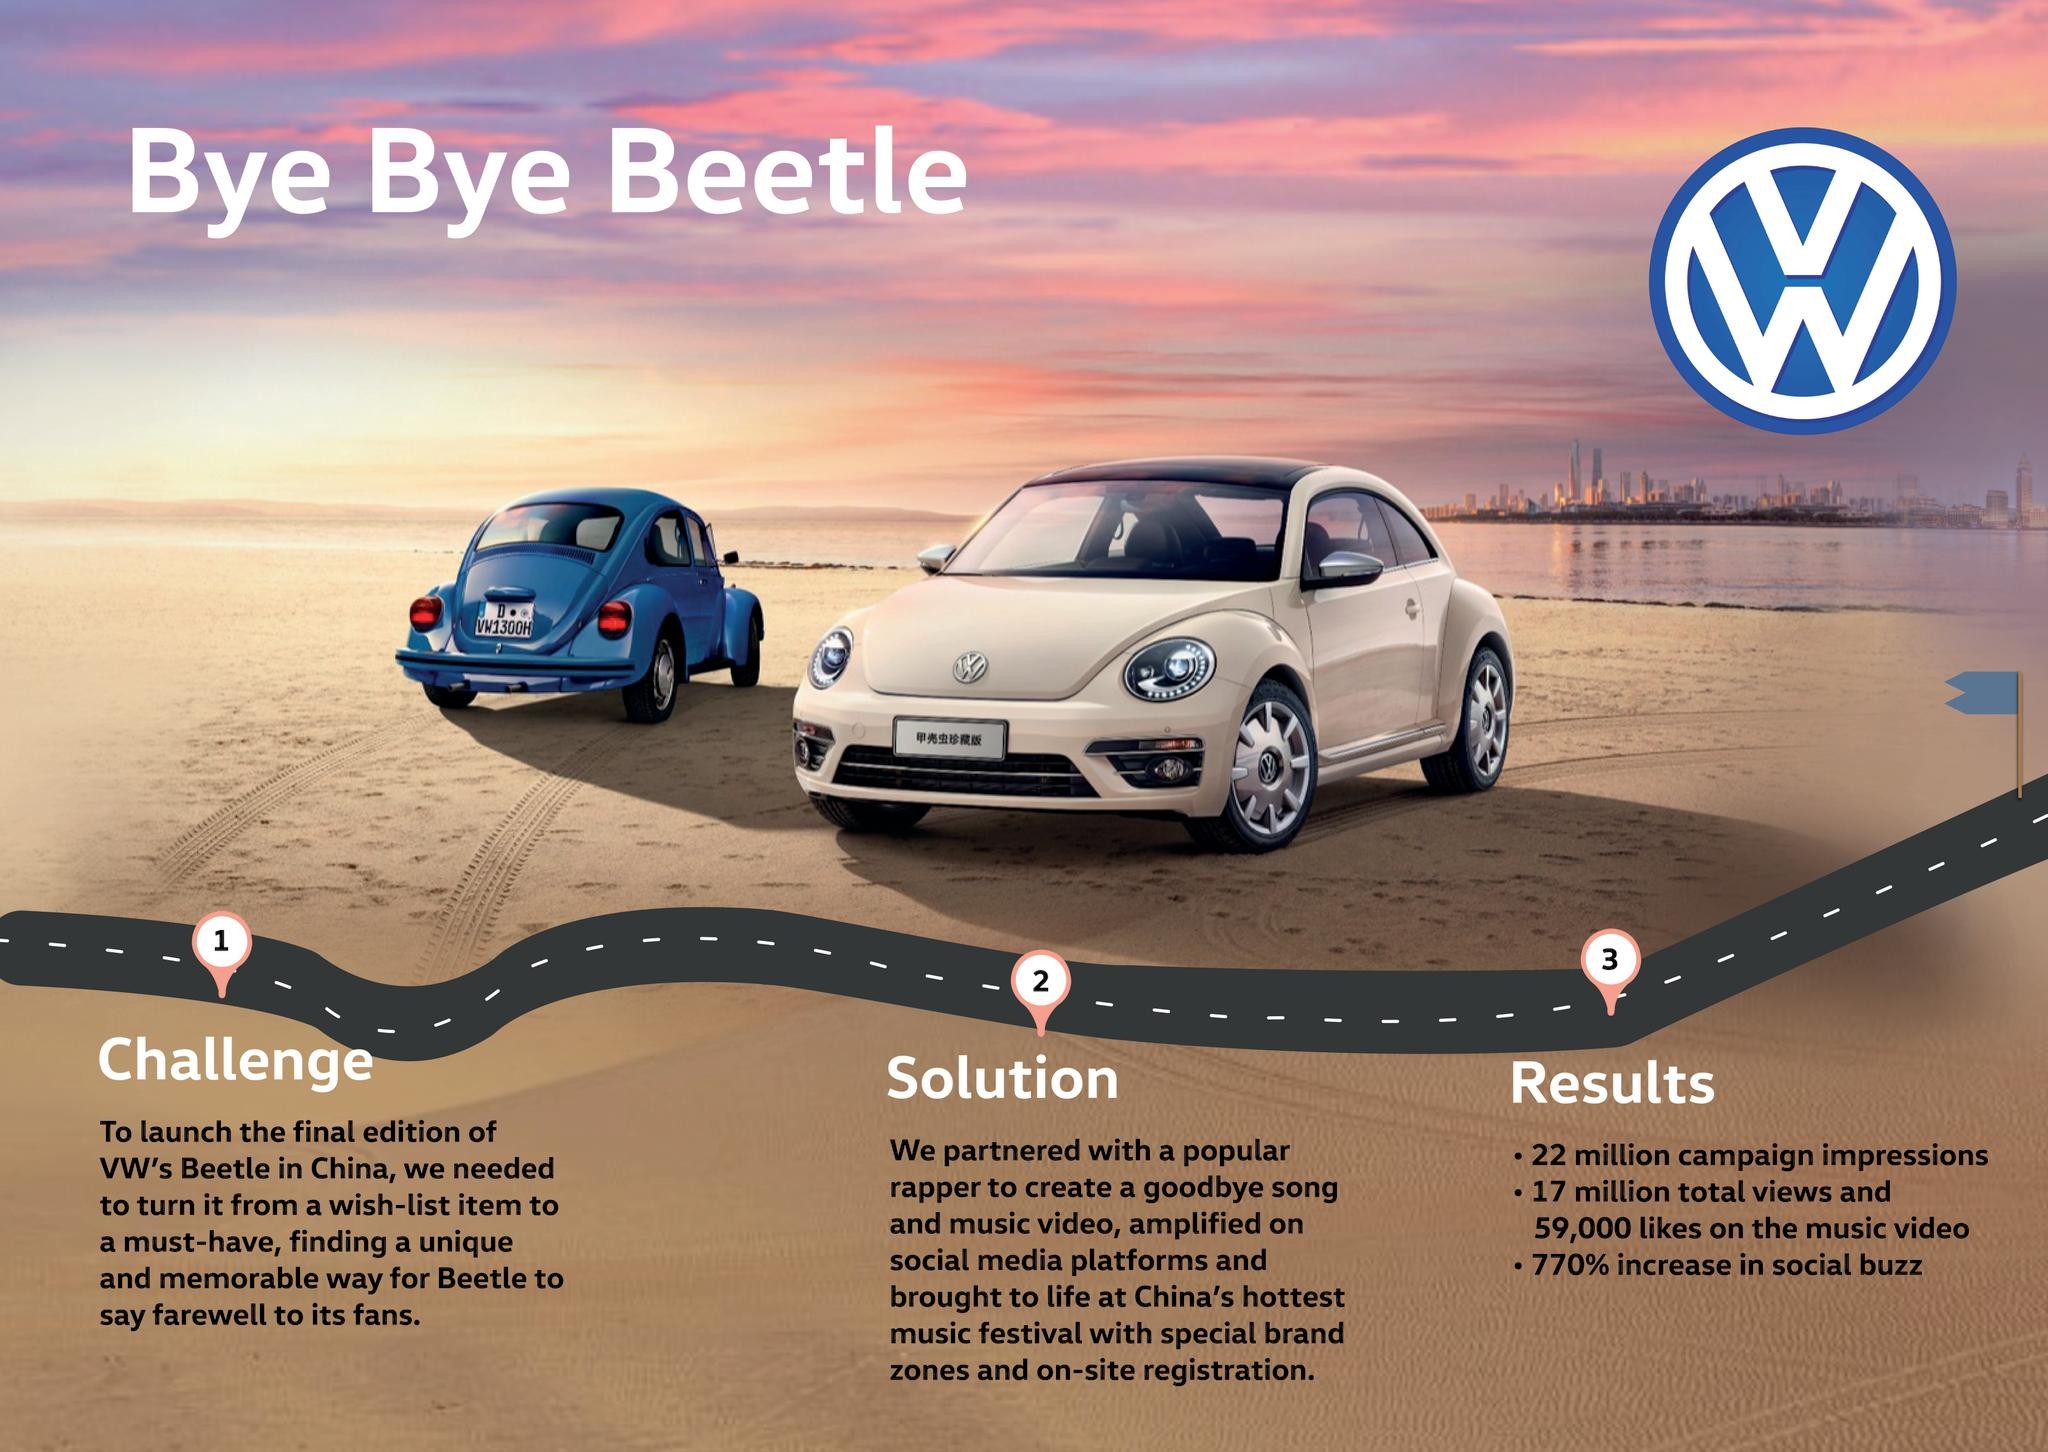 Bye Bye Beetle